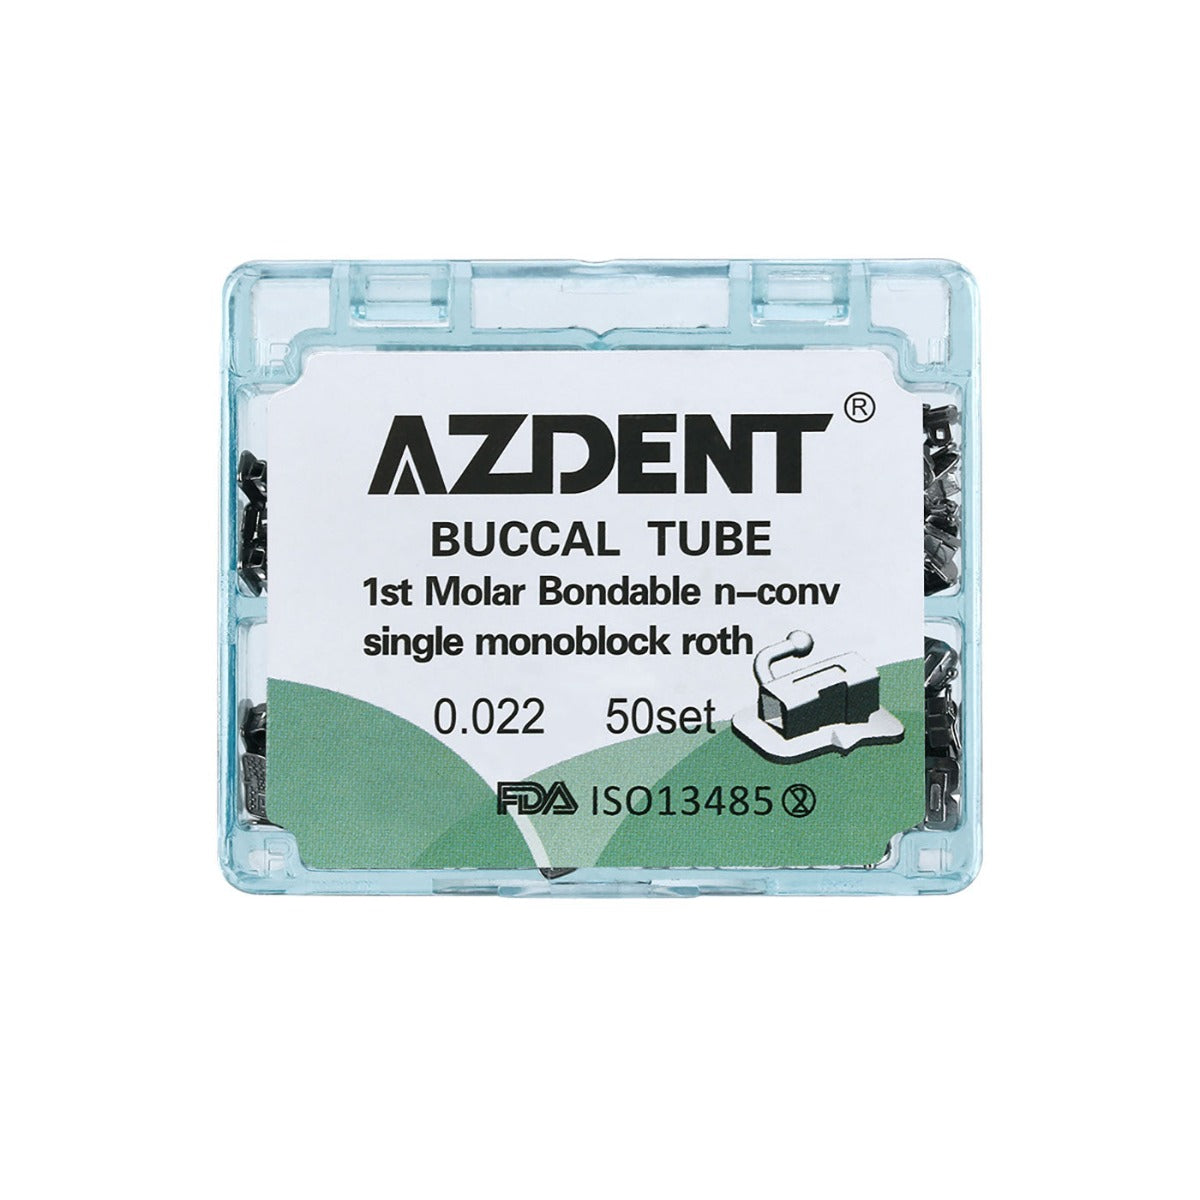 AZDENT Dental Orthodontic Buccal Tube 1st Molar Bondable Monoblock Non-convertible Roth 0.022 50Sets/Box - azdentall.com